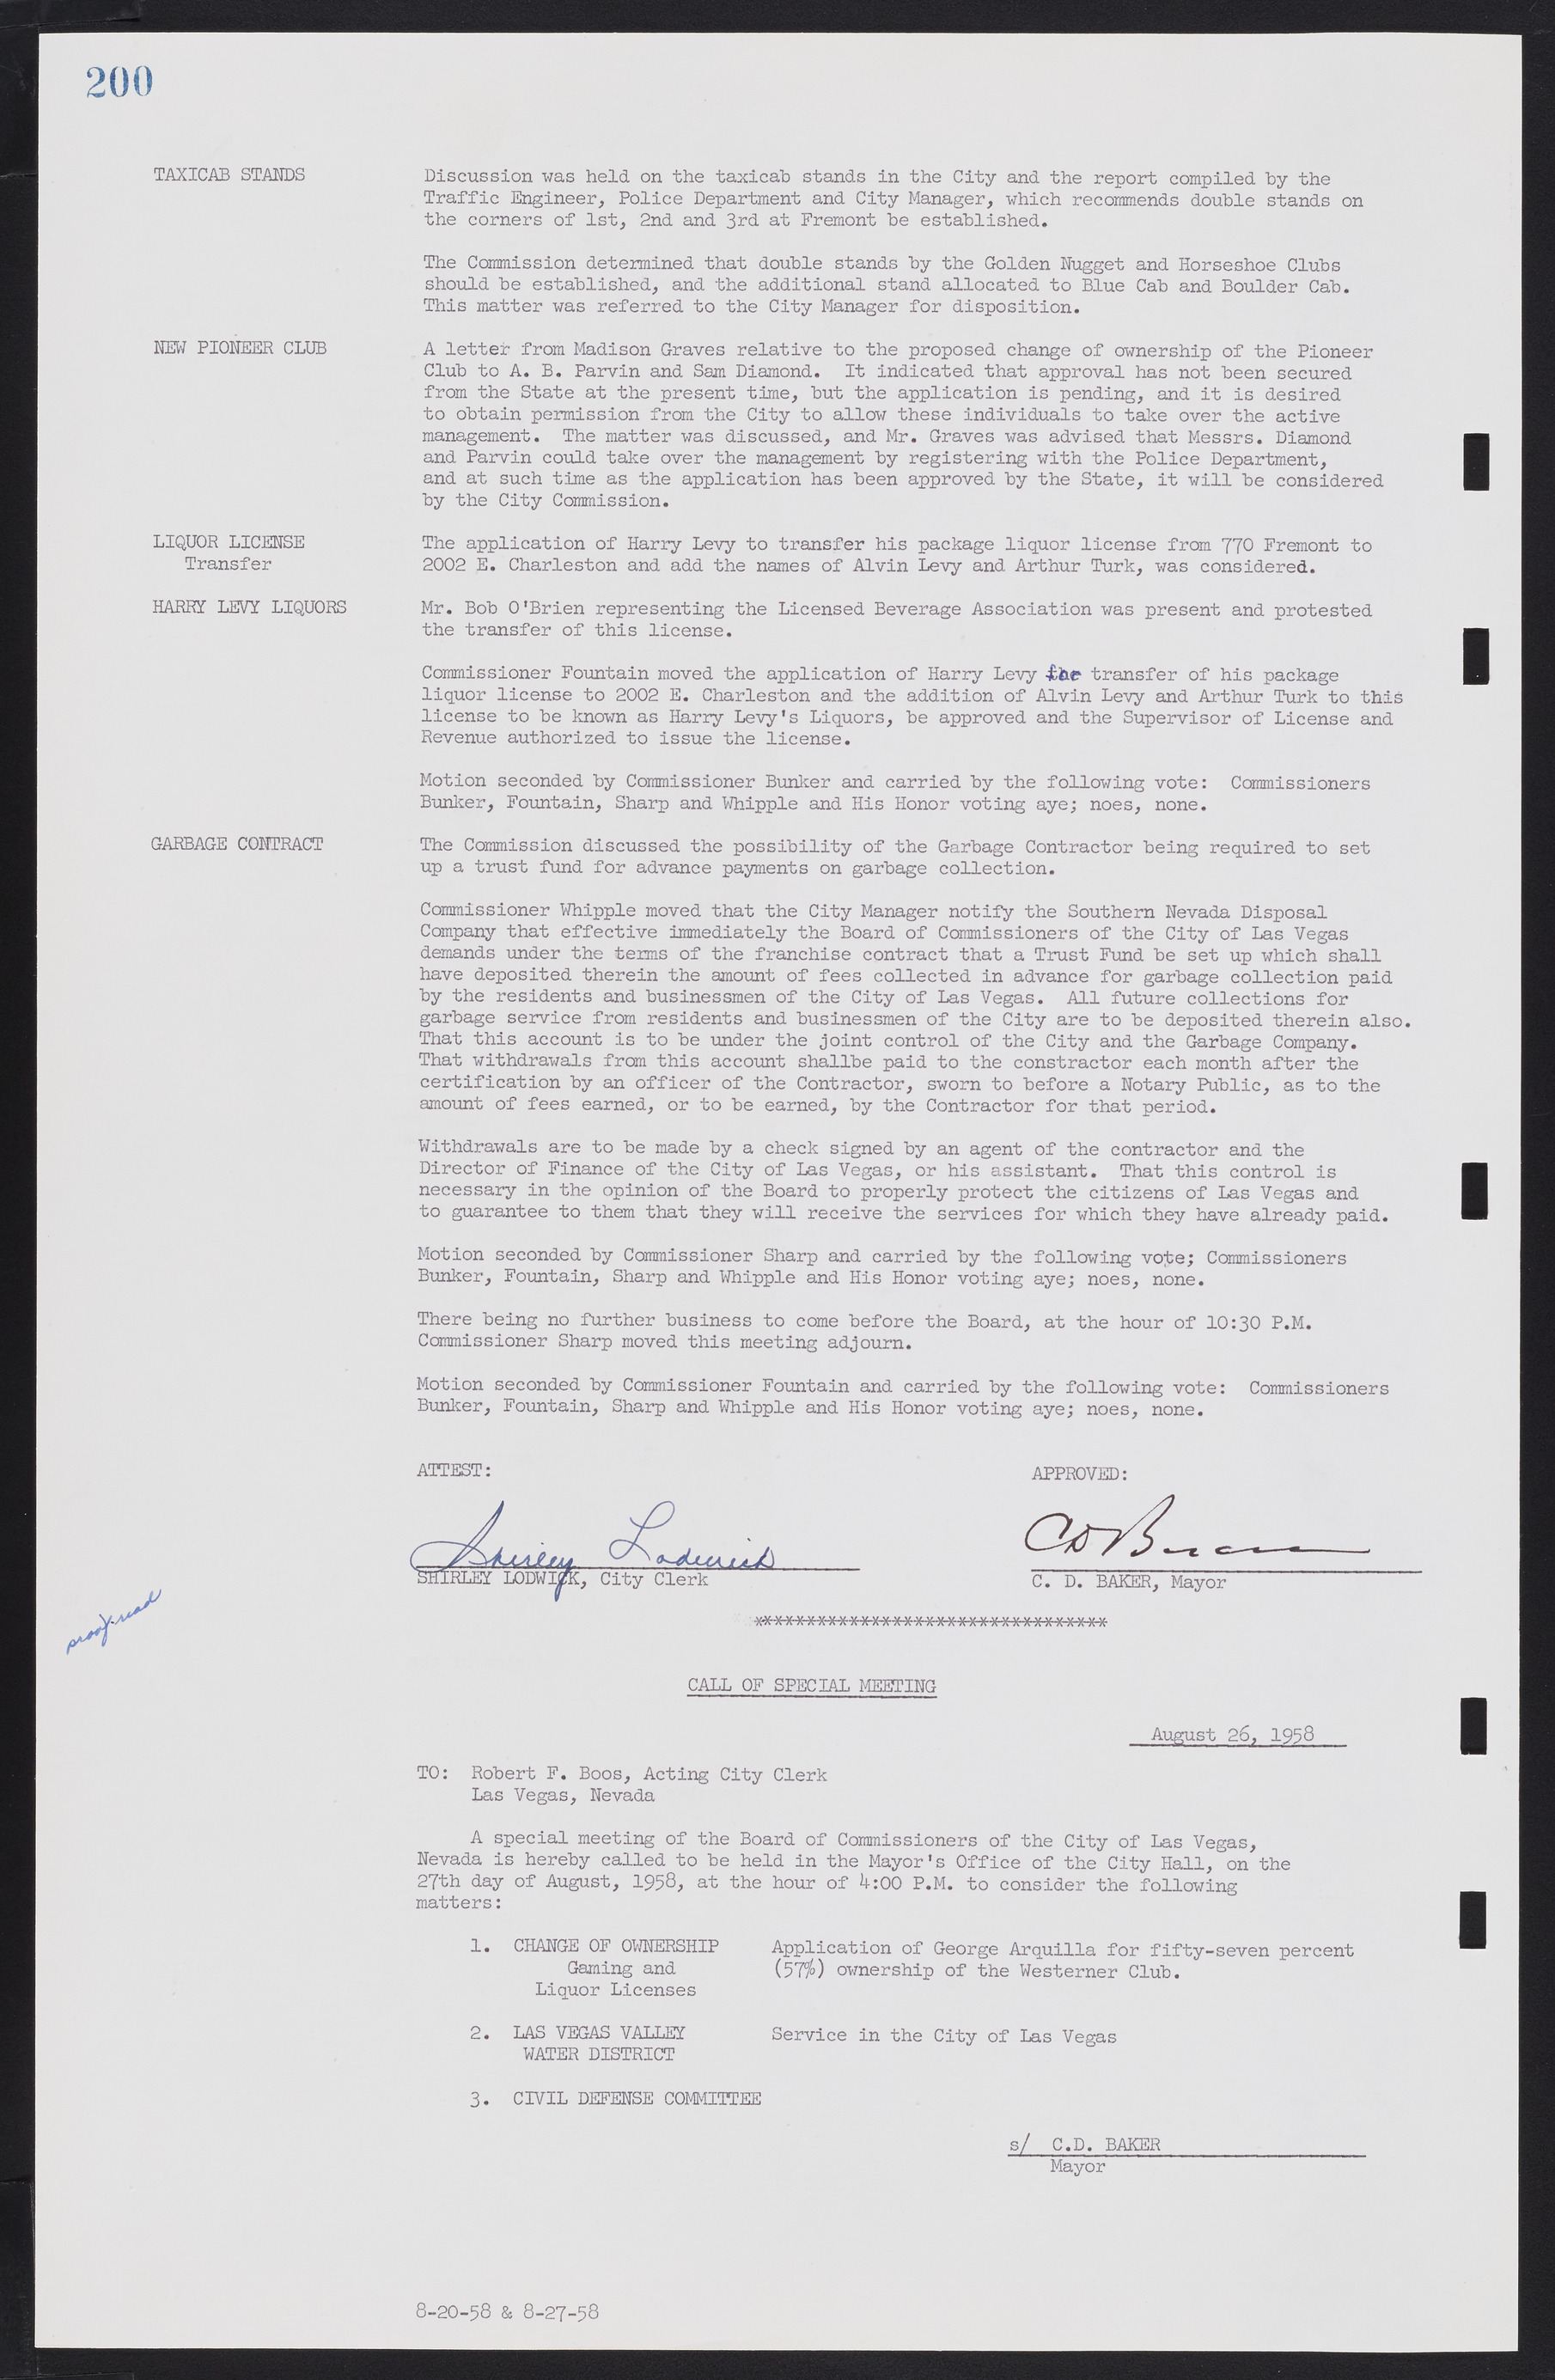 Las Vegas City Commission Minutes, November 20, 1957 to December 2, 1959, lvc000011-204